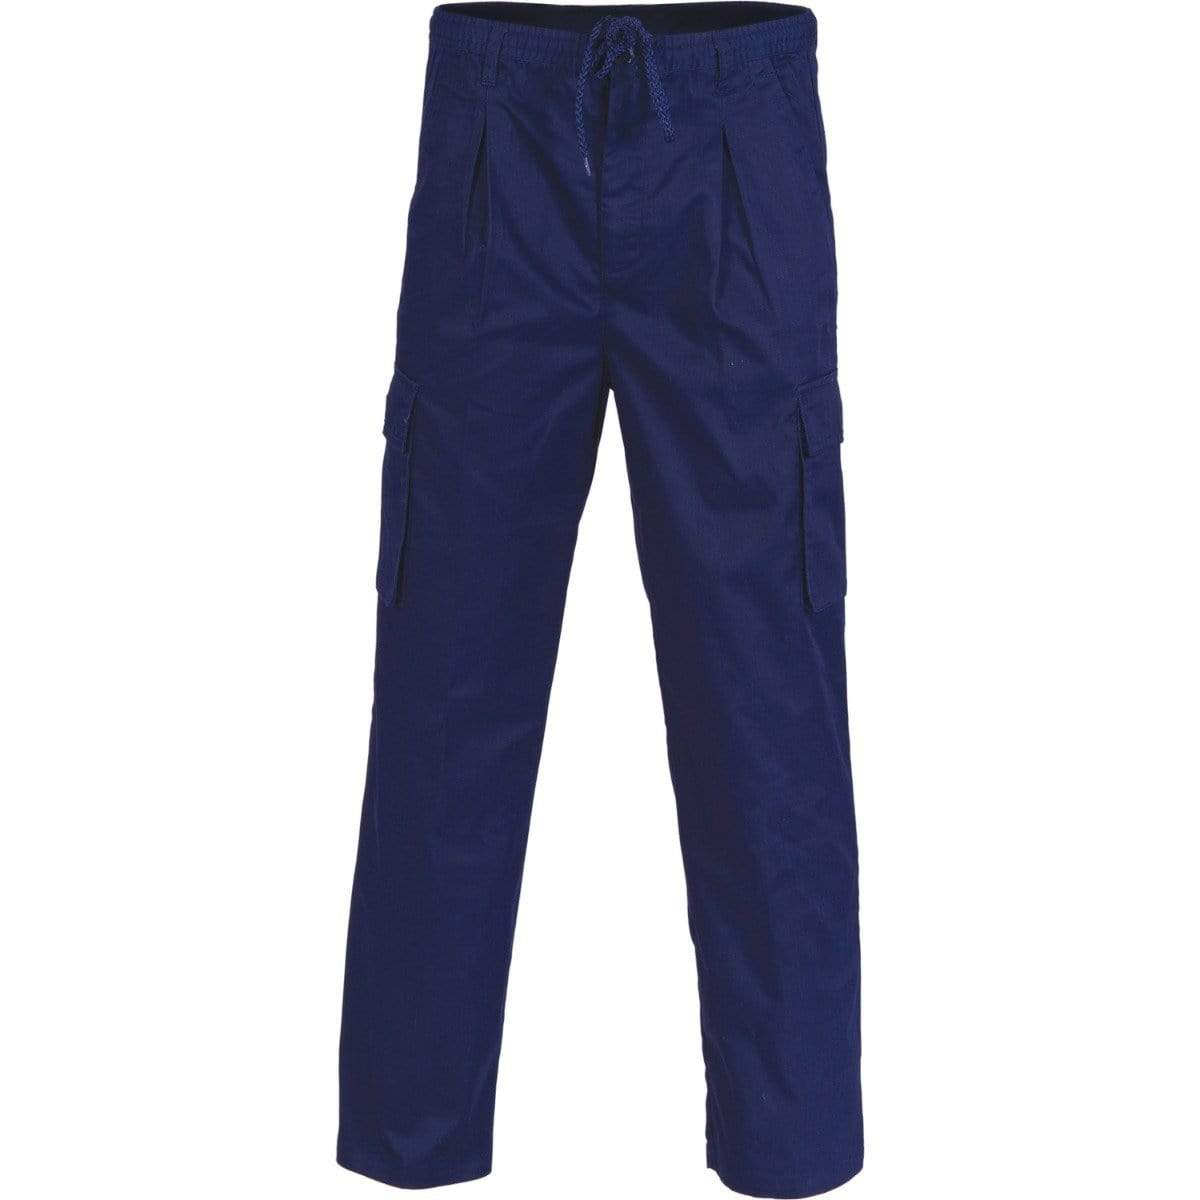 DNC Workwear Work Wear Navy / XS DNC WORKWEAR Polyester Cotton 3-in-1 Cargo Pants 1504